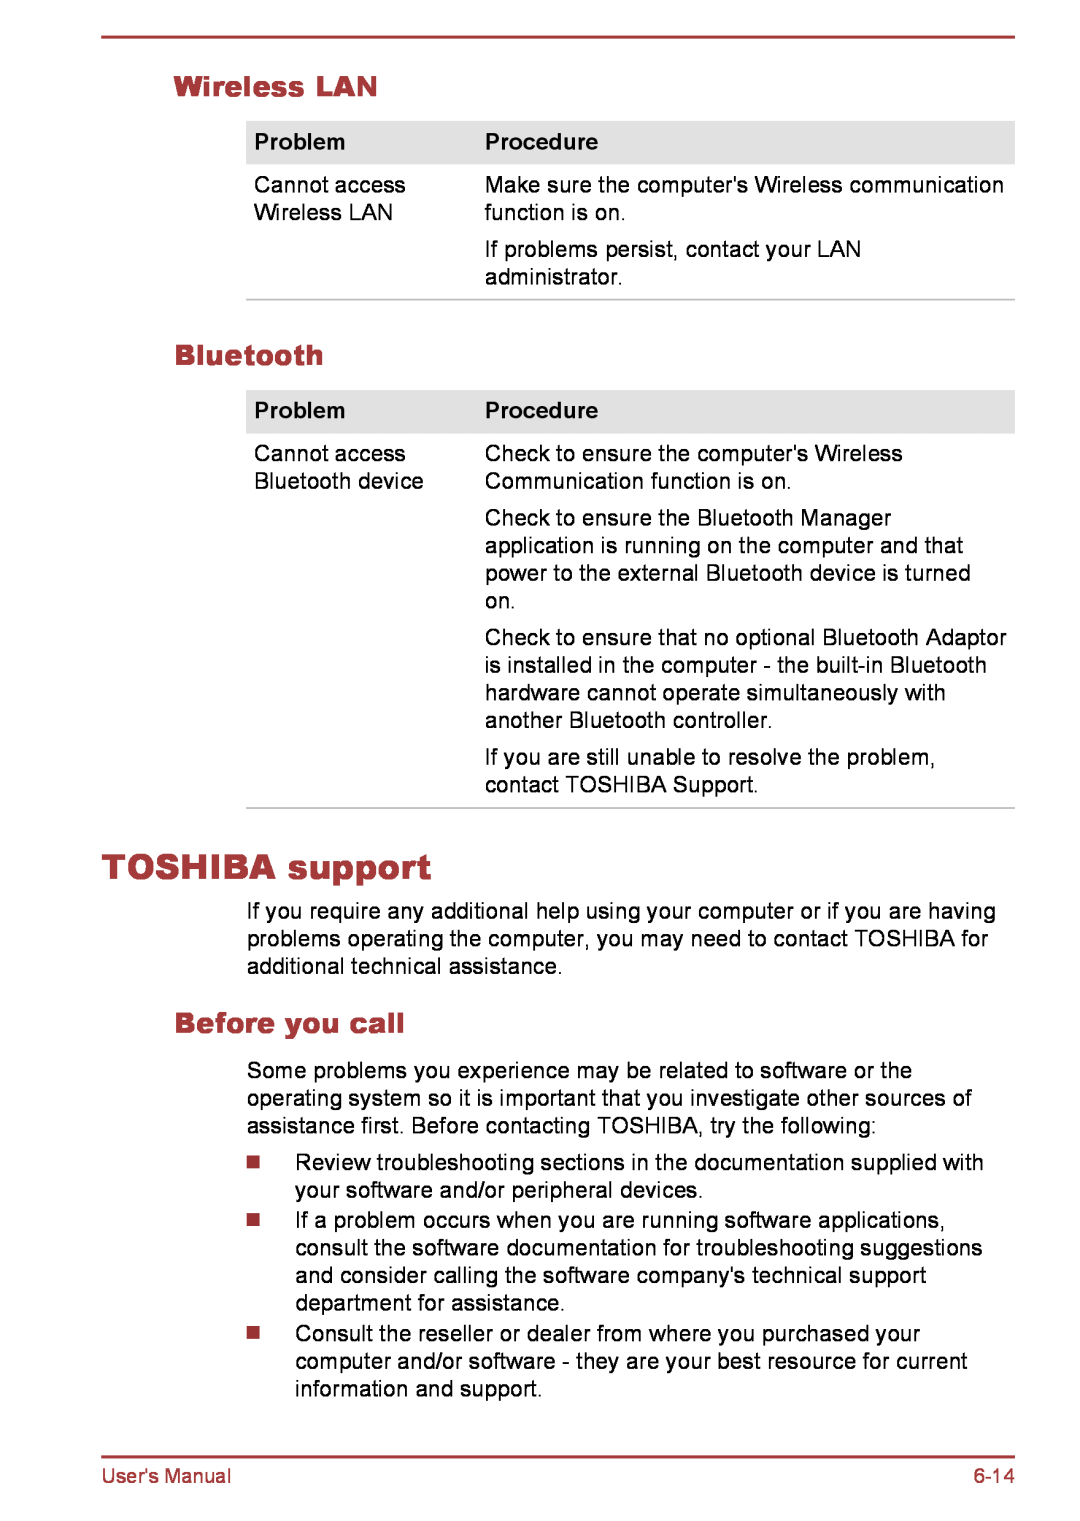 Toshiba L30W-B, L35W-B user manual TOSHIBA support, Wireless LAN, Bluetooth, Before you call 